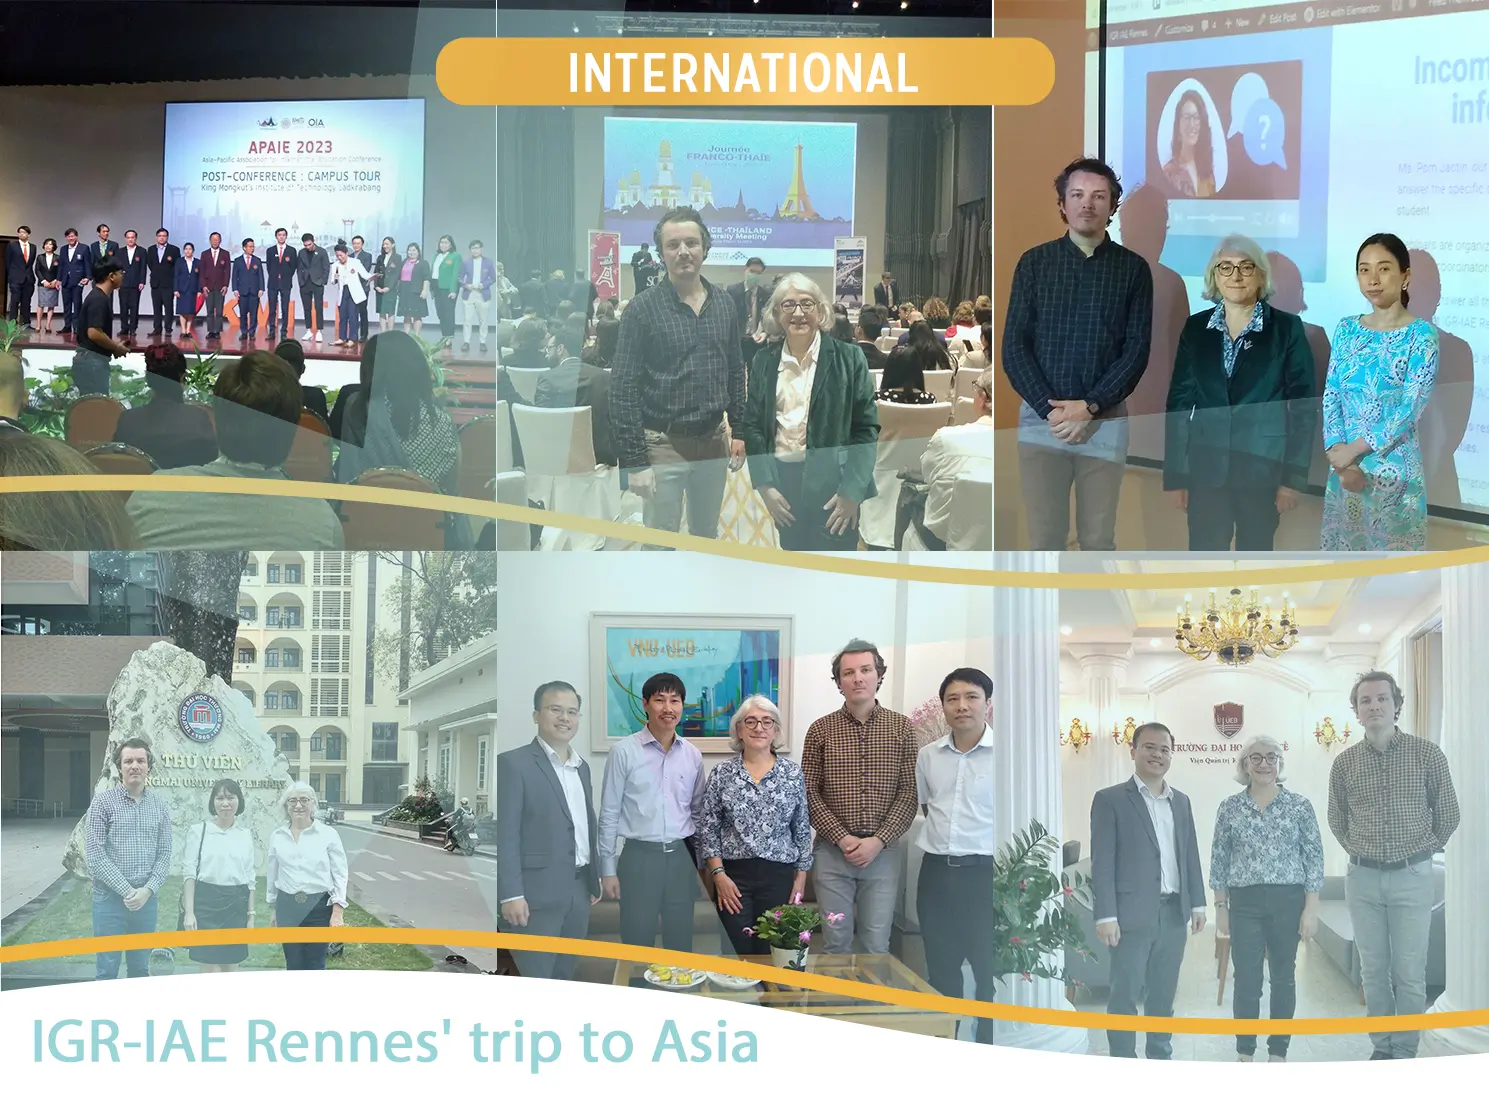 Follow up on IGR-IAE Rennes’ trip to Asia